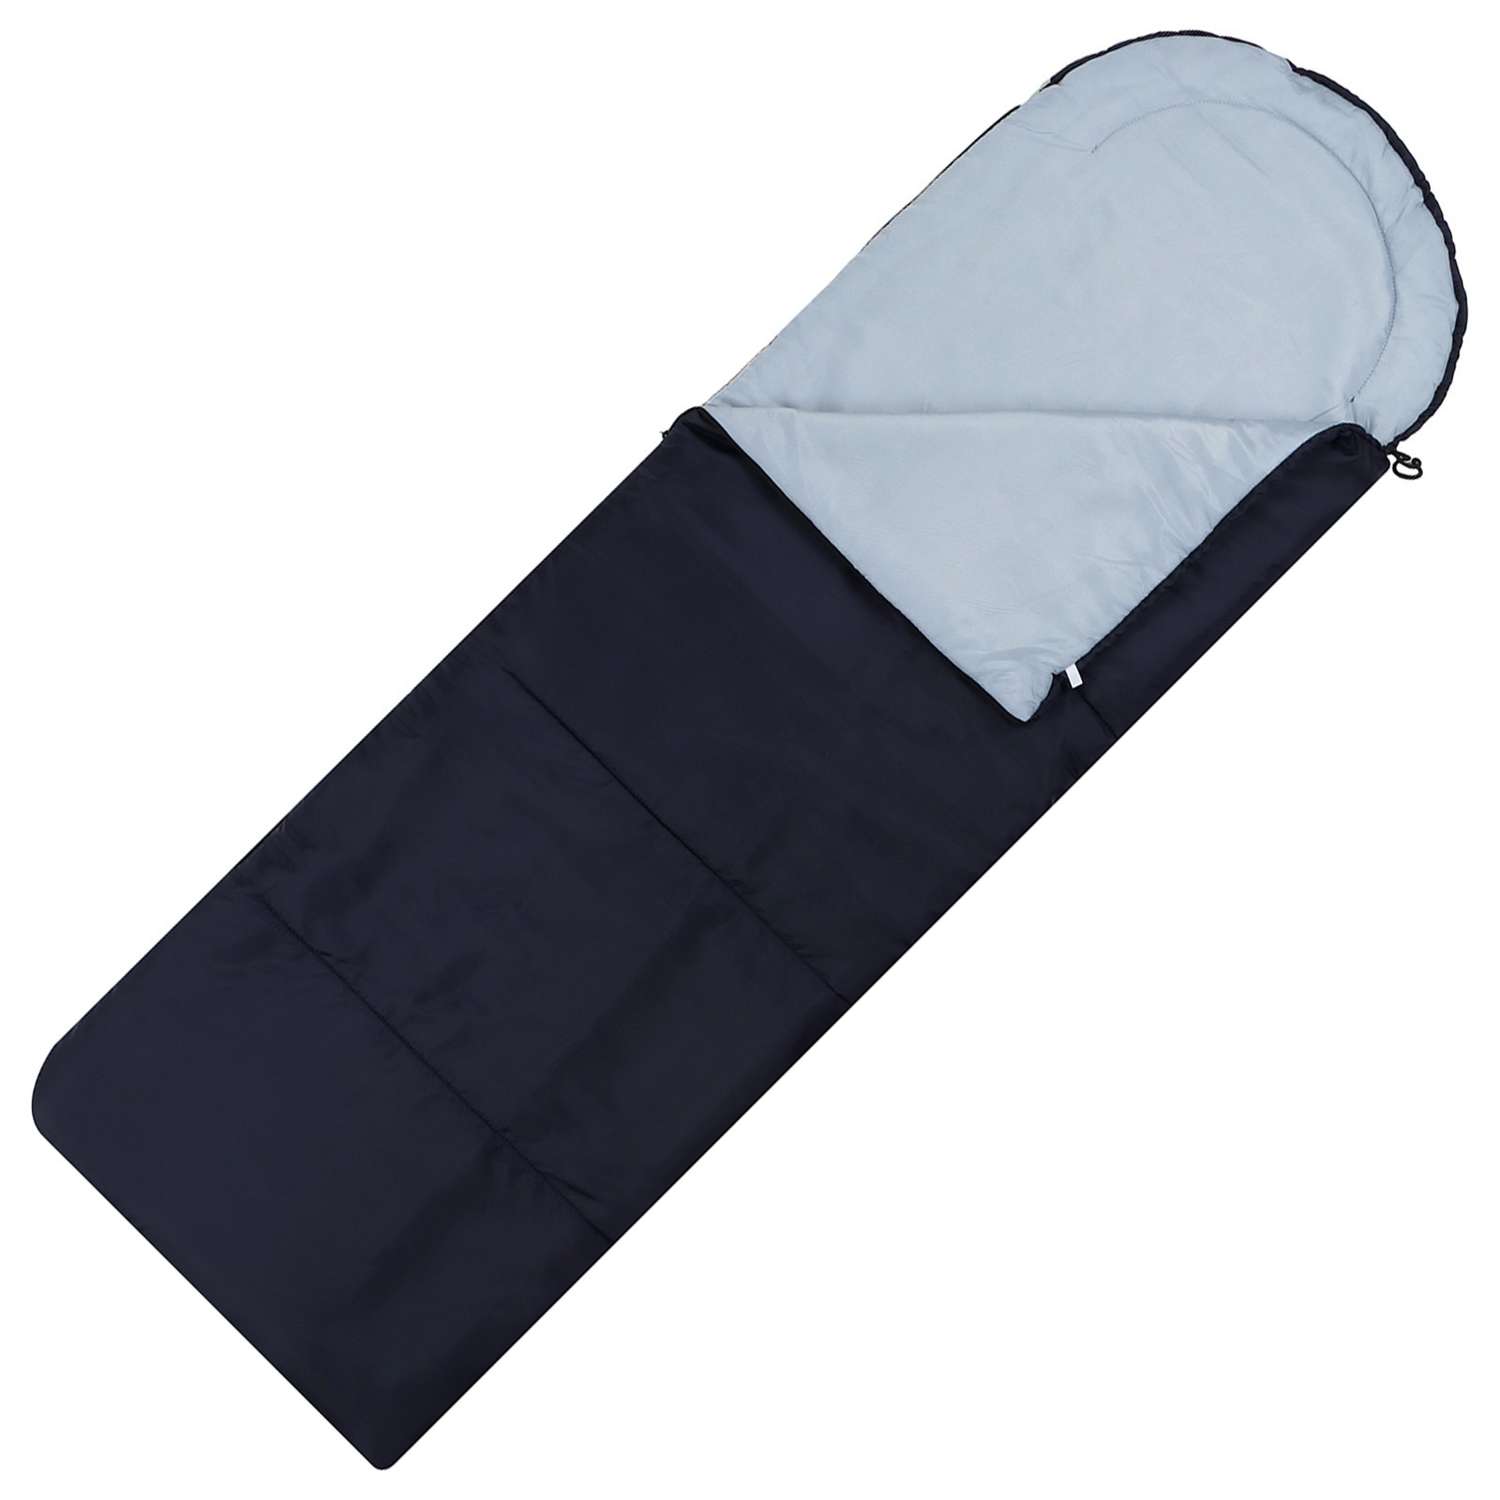 Спальник-одеяло Maclay с подголовником 235х75 см до -5°С - фото 3